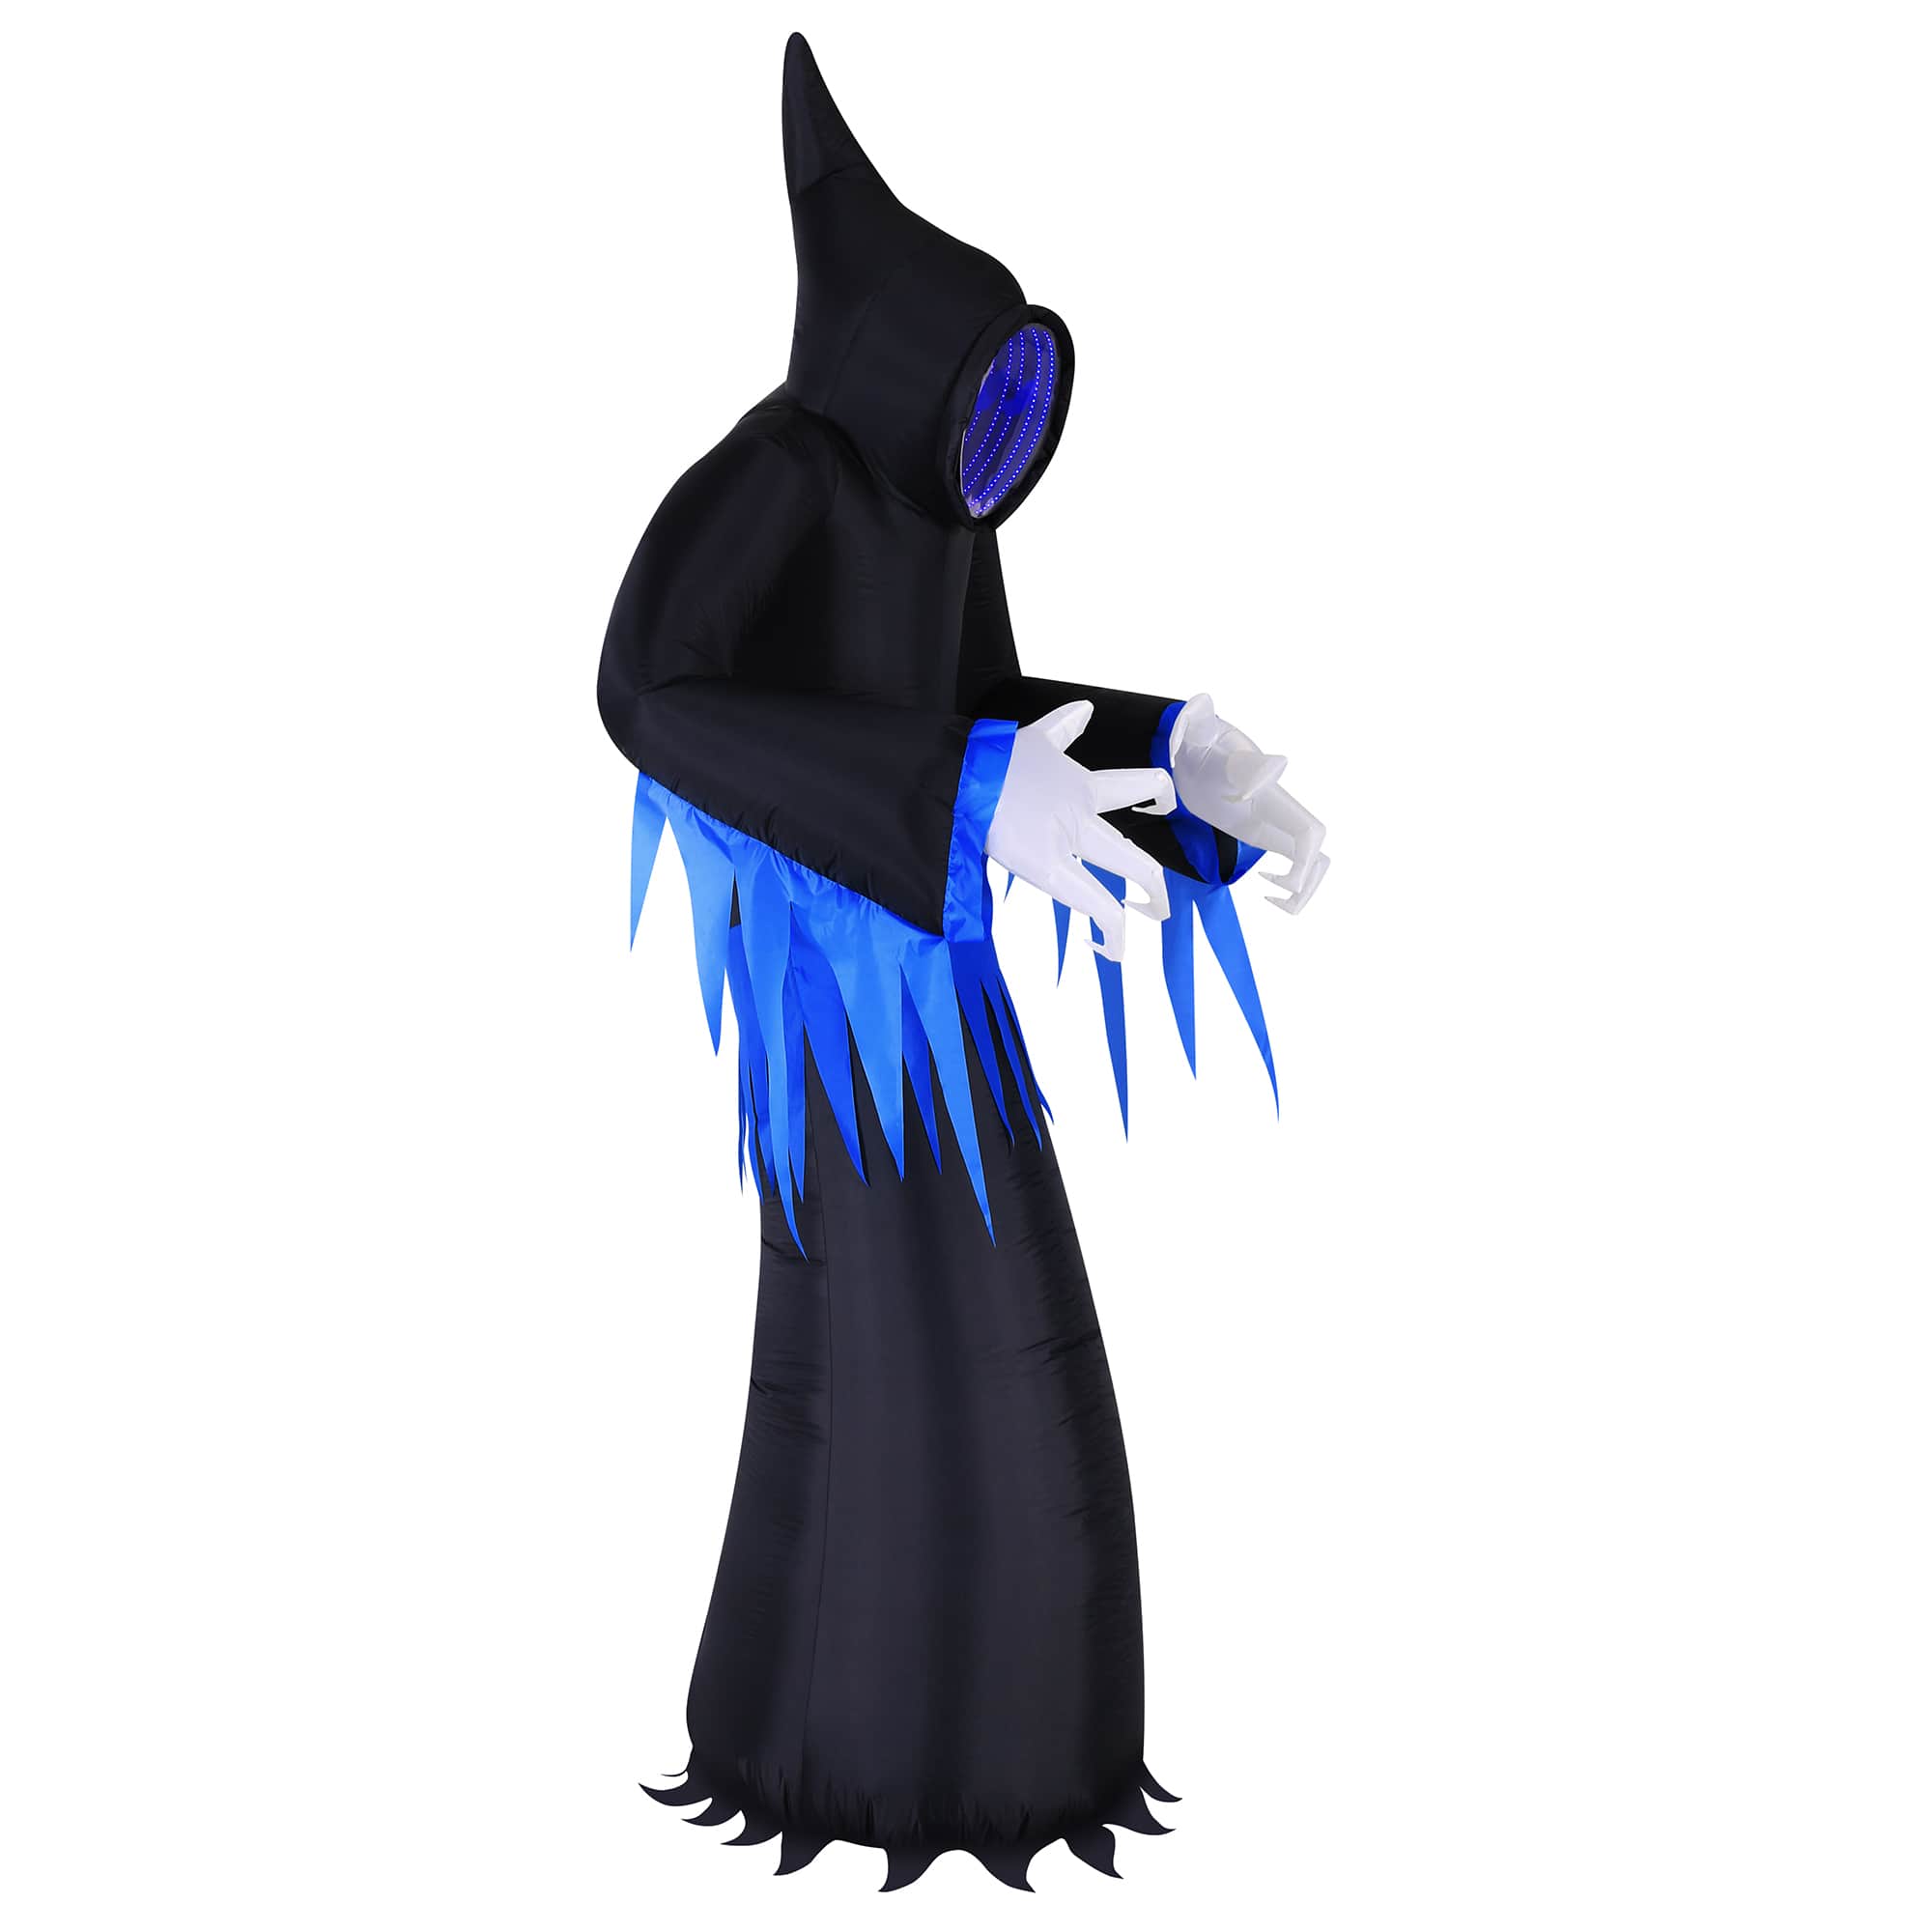 8ft. Inflatable Halloween Light Up Infinity Mirror Reaper